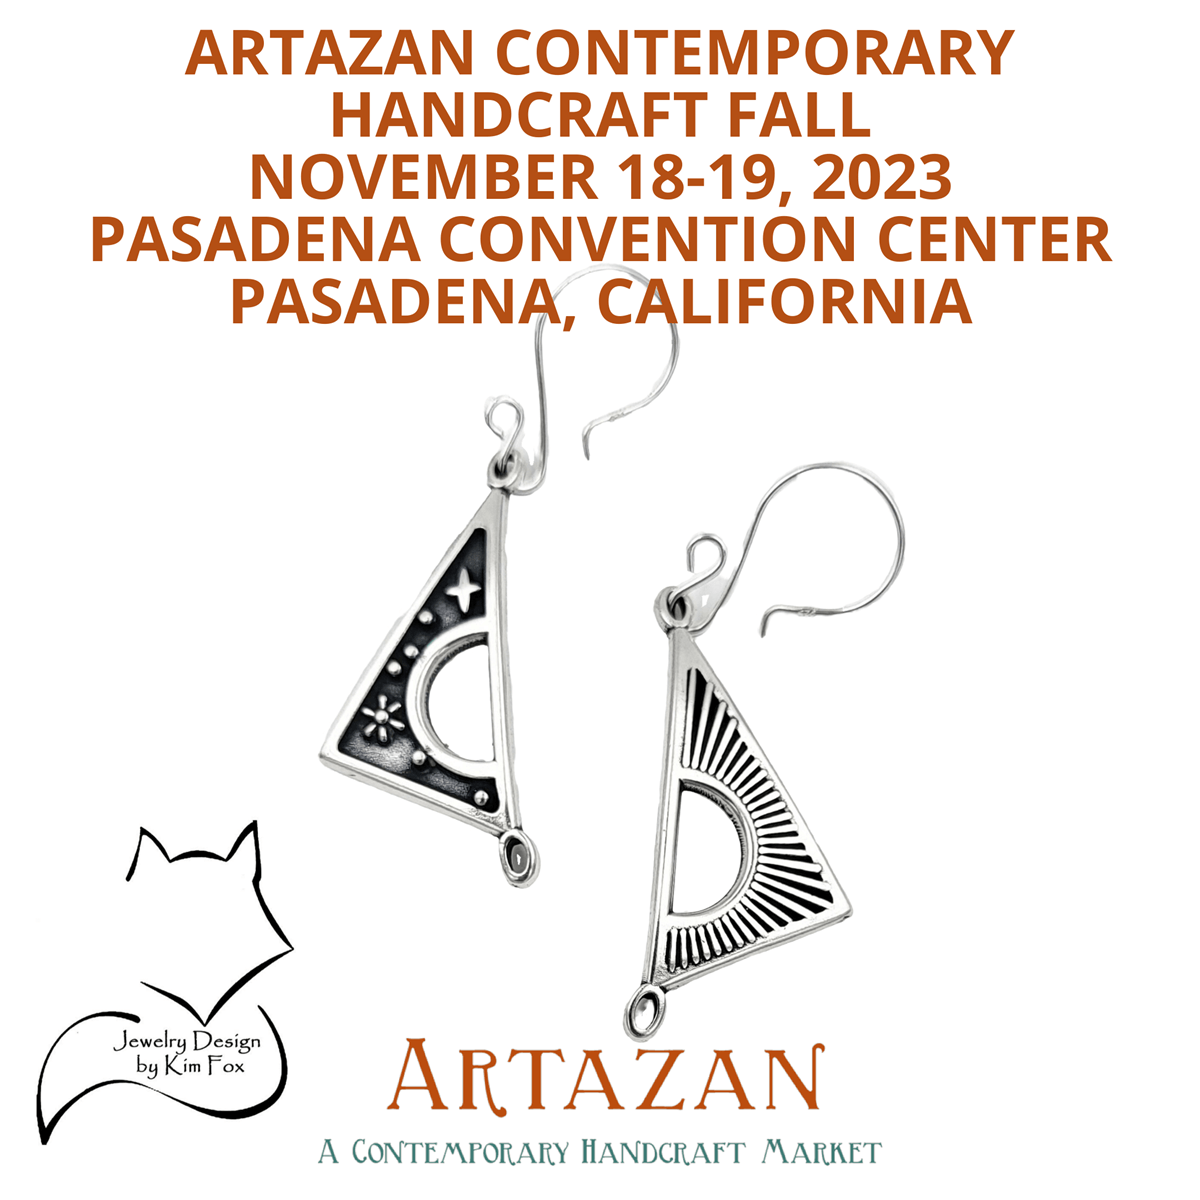 Artazan Contemporary Handcraft Fall 2023